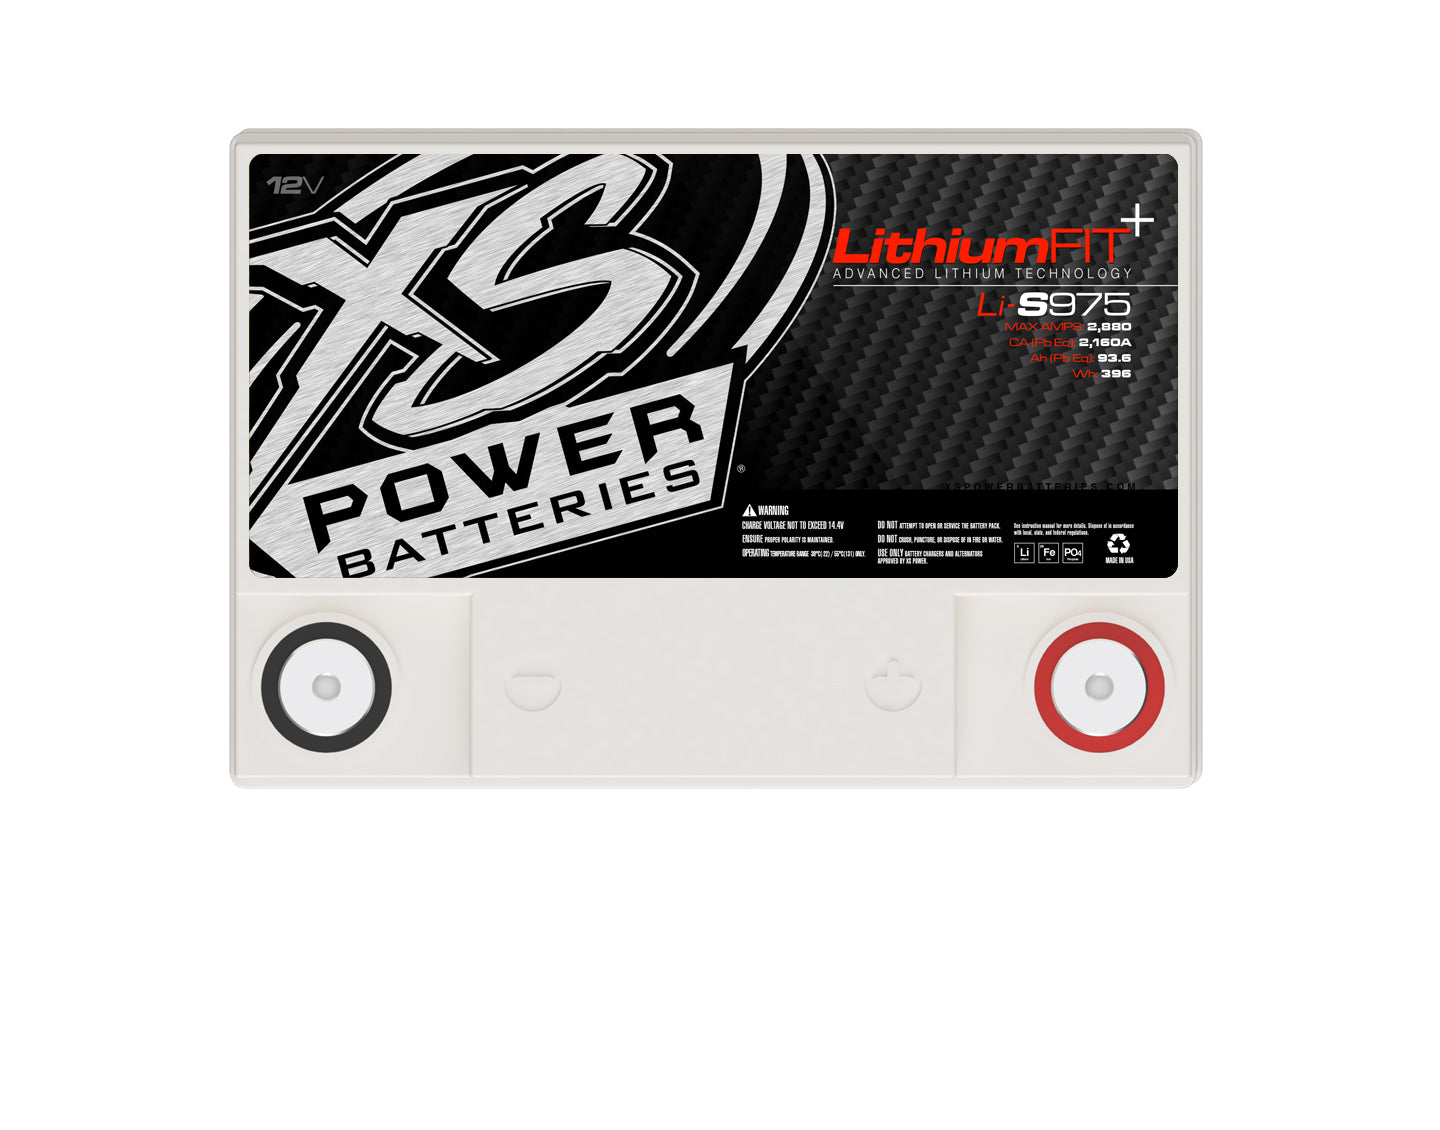 Li-S975 XS Power 12VDC Lithium Racing Battery 2880A 31.2Ah Group U1R